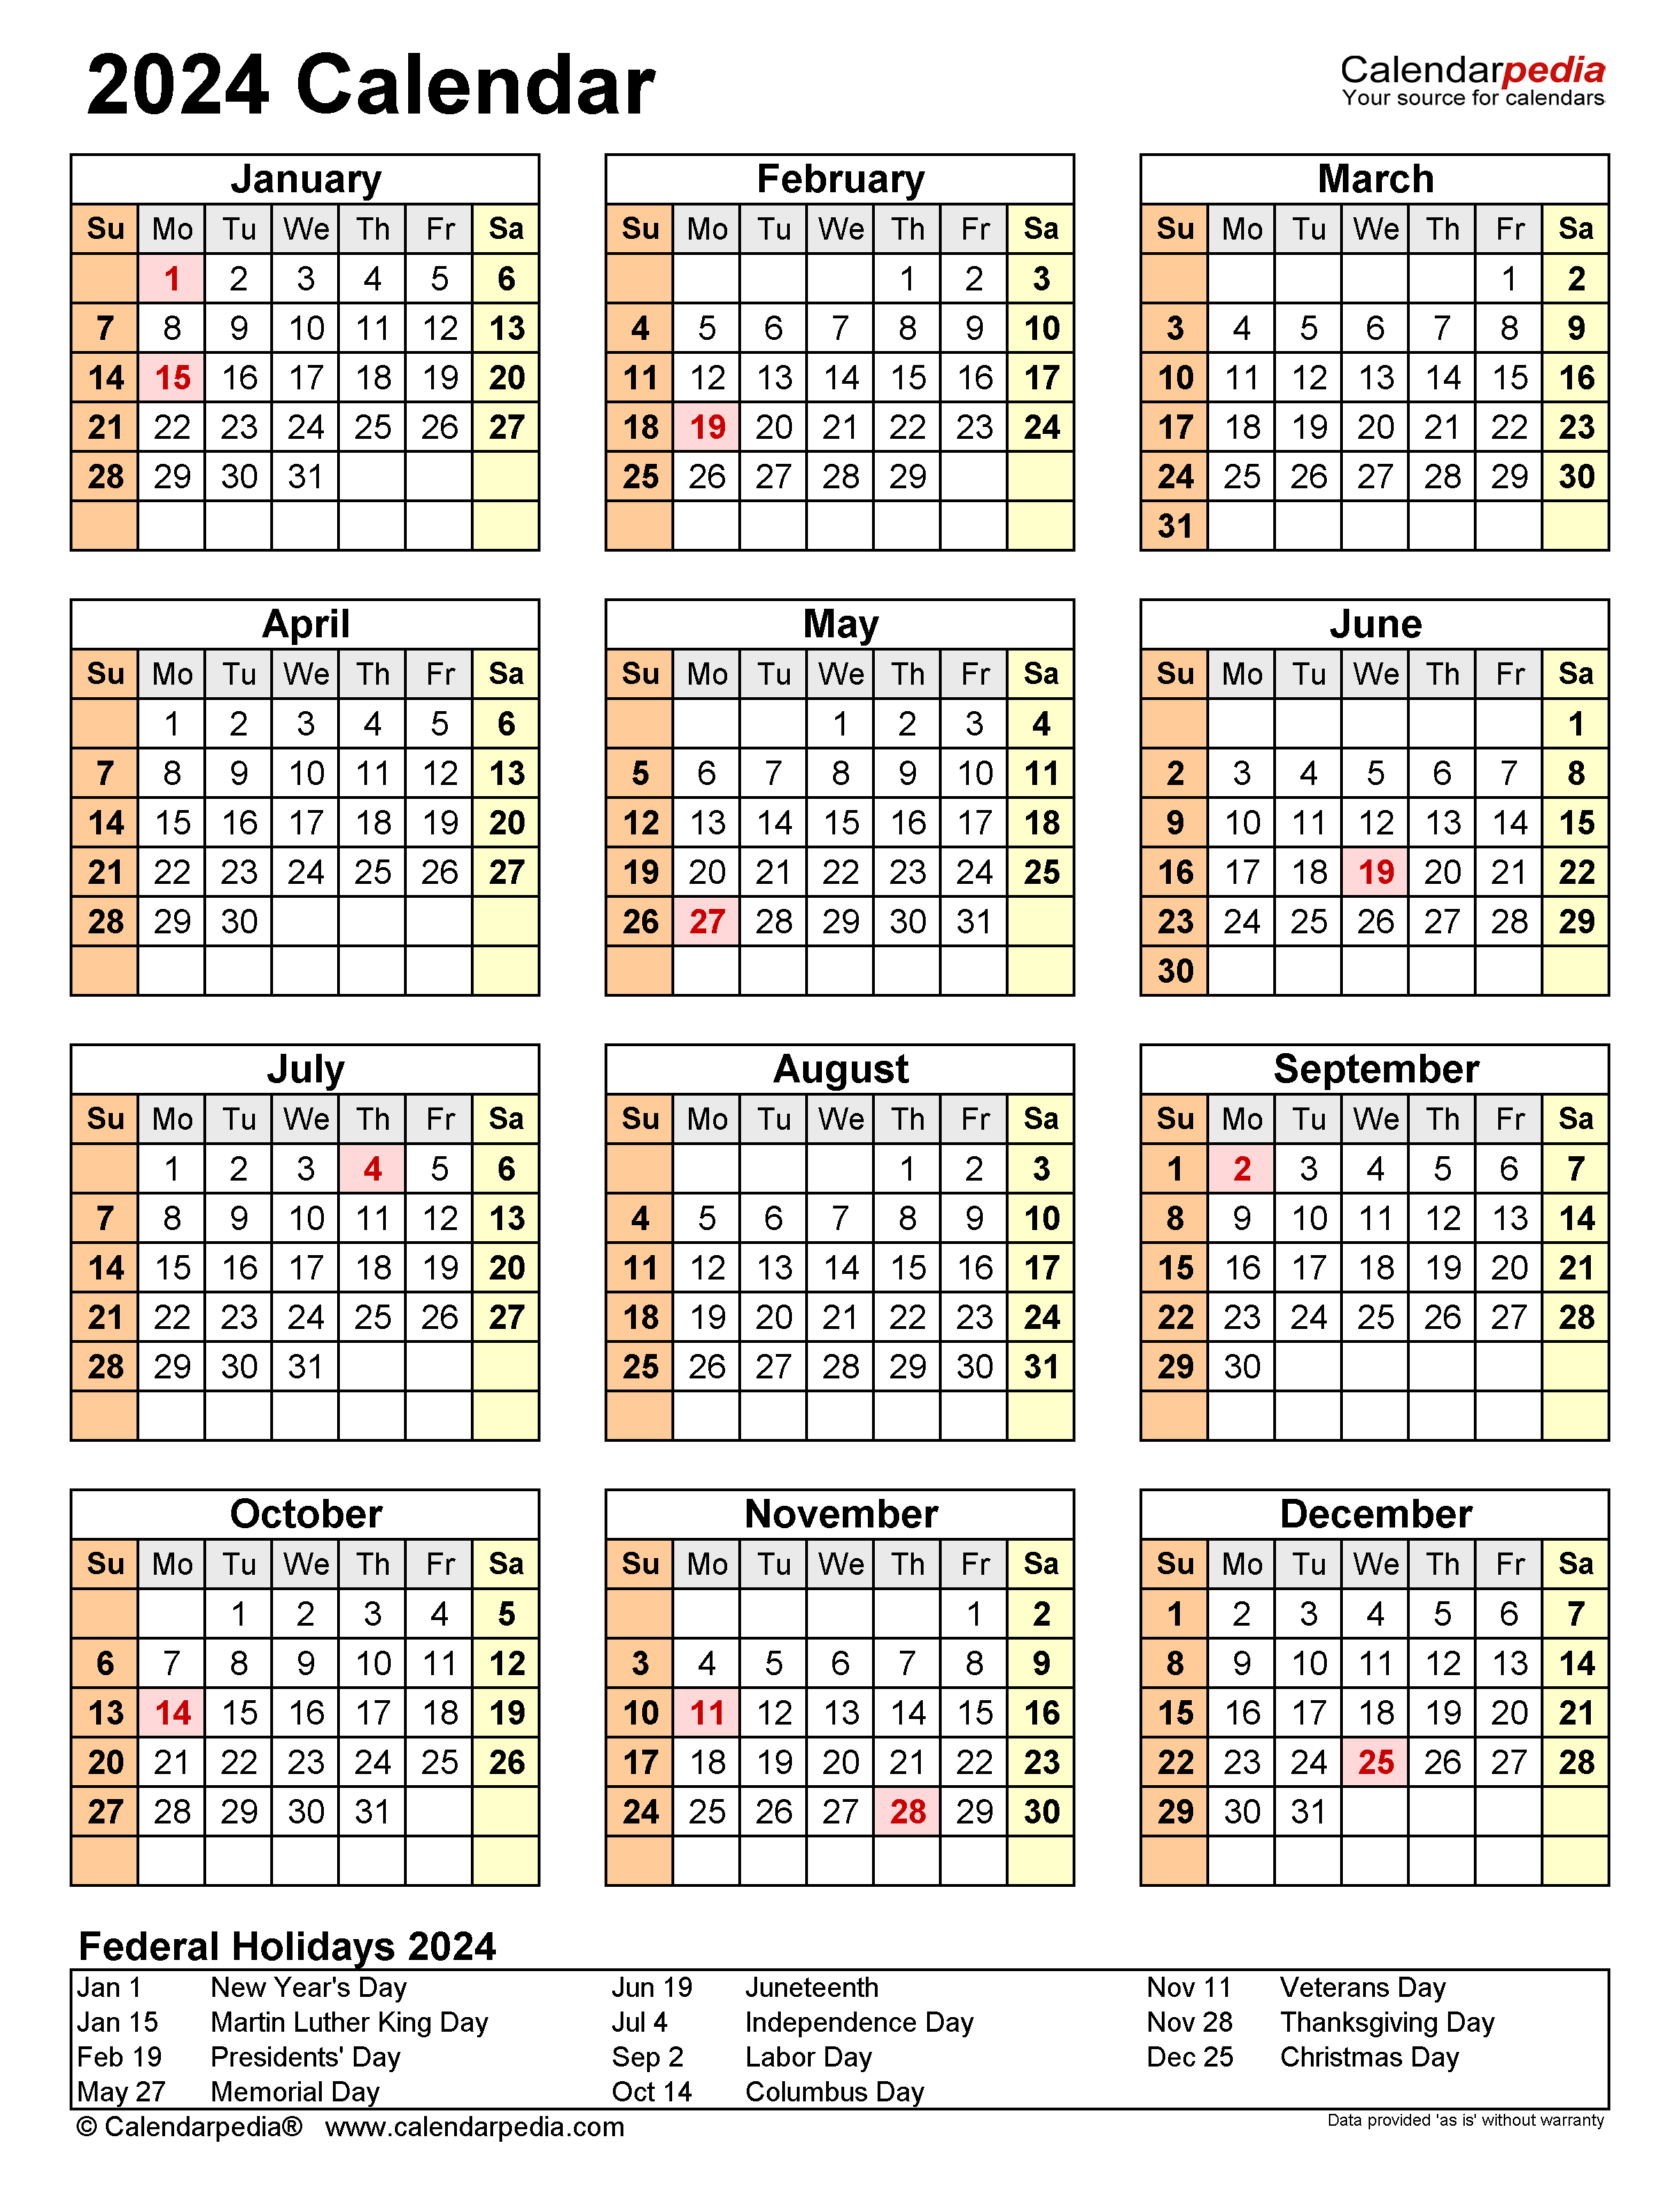 Free Printable 2024 Calendar With Holidays Crownflourmills - Free Printable 2024 Monthly Calendar With Holidays Large Print